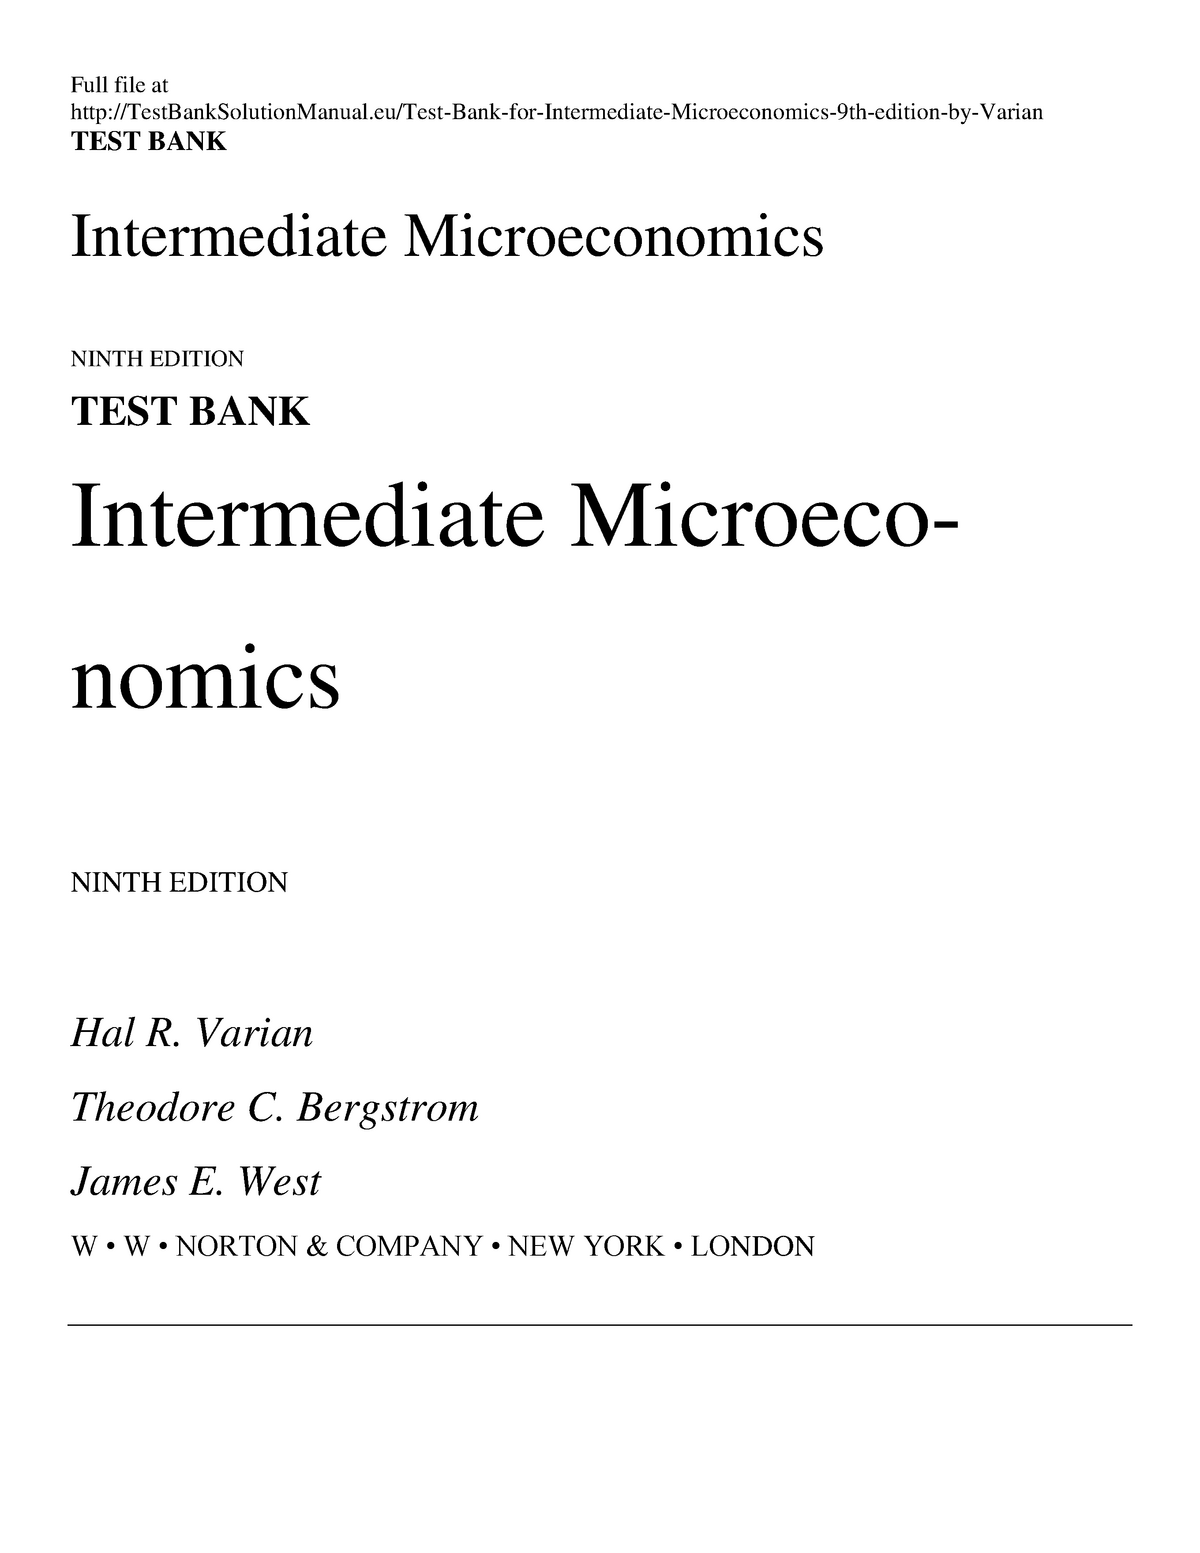 Intermediate bank. Микроэкономика хэл р Вэриан купить. Hal varian Intermediate Microeconomics Cheat Sheet.